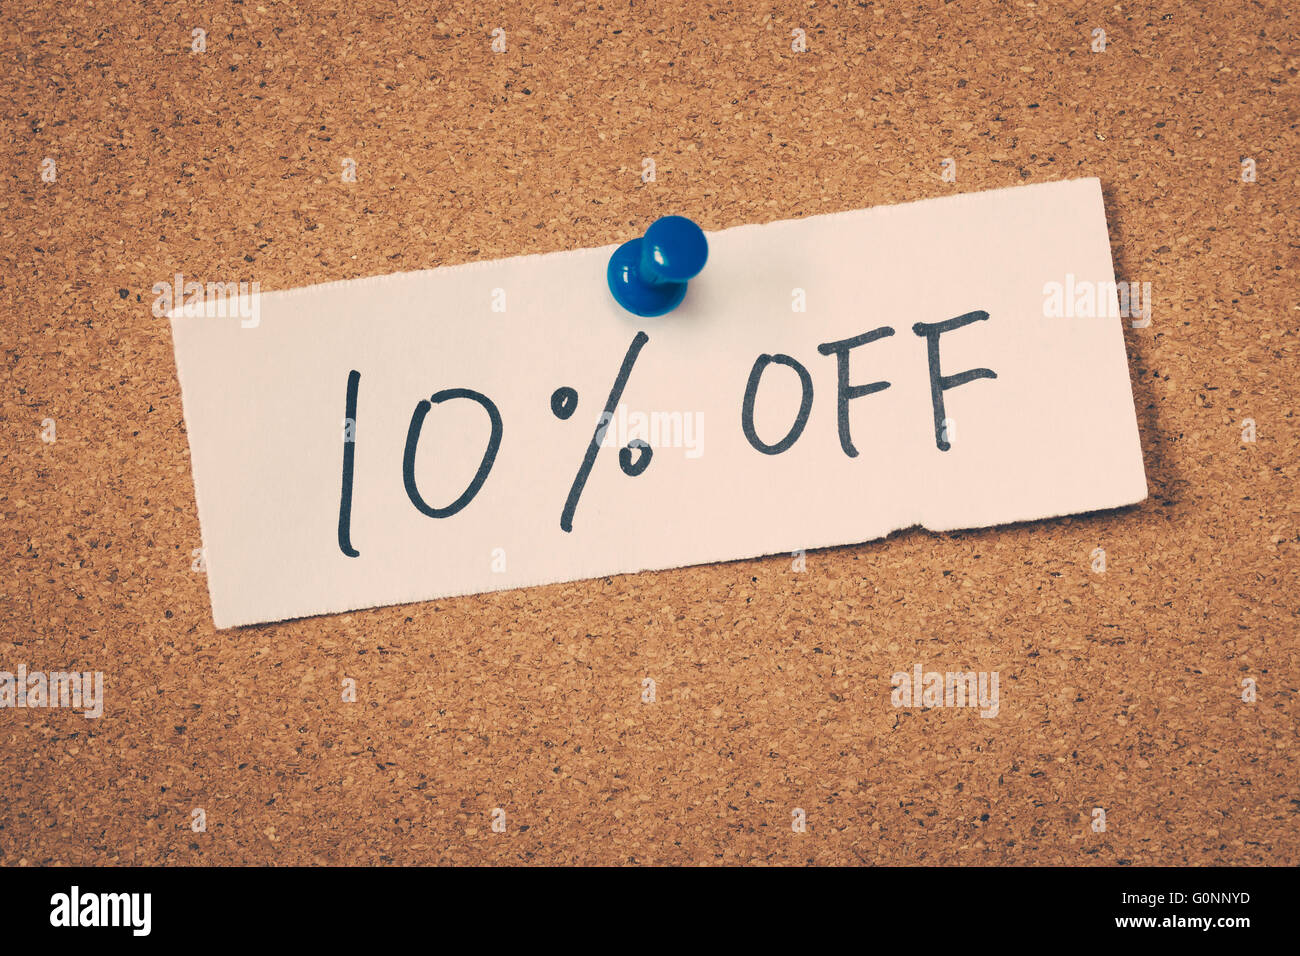 10% ten percent off Stock Photo